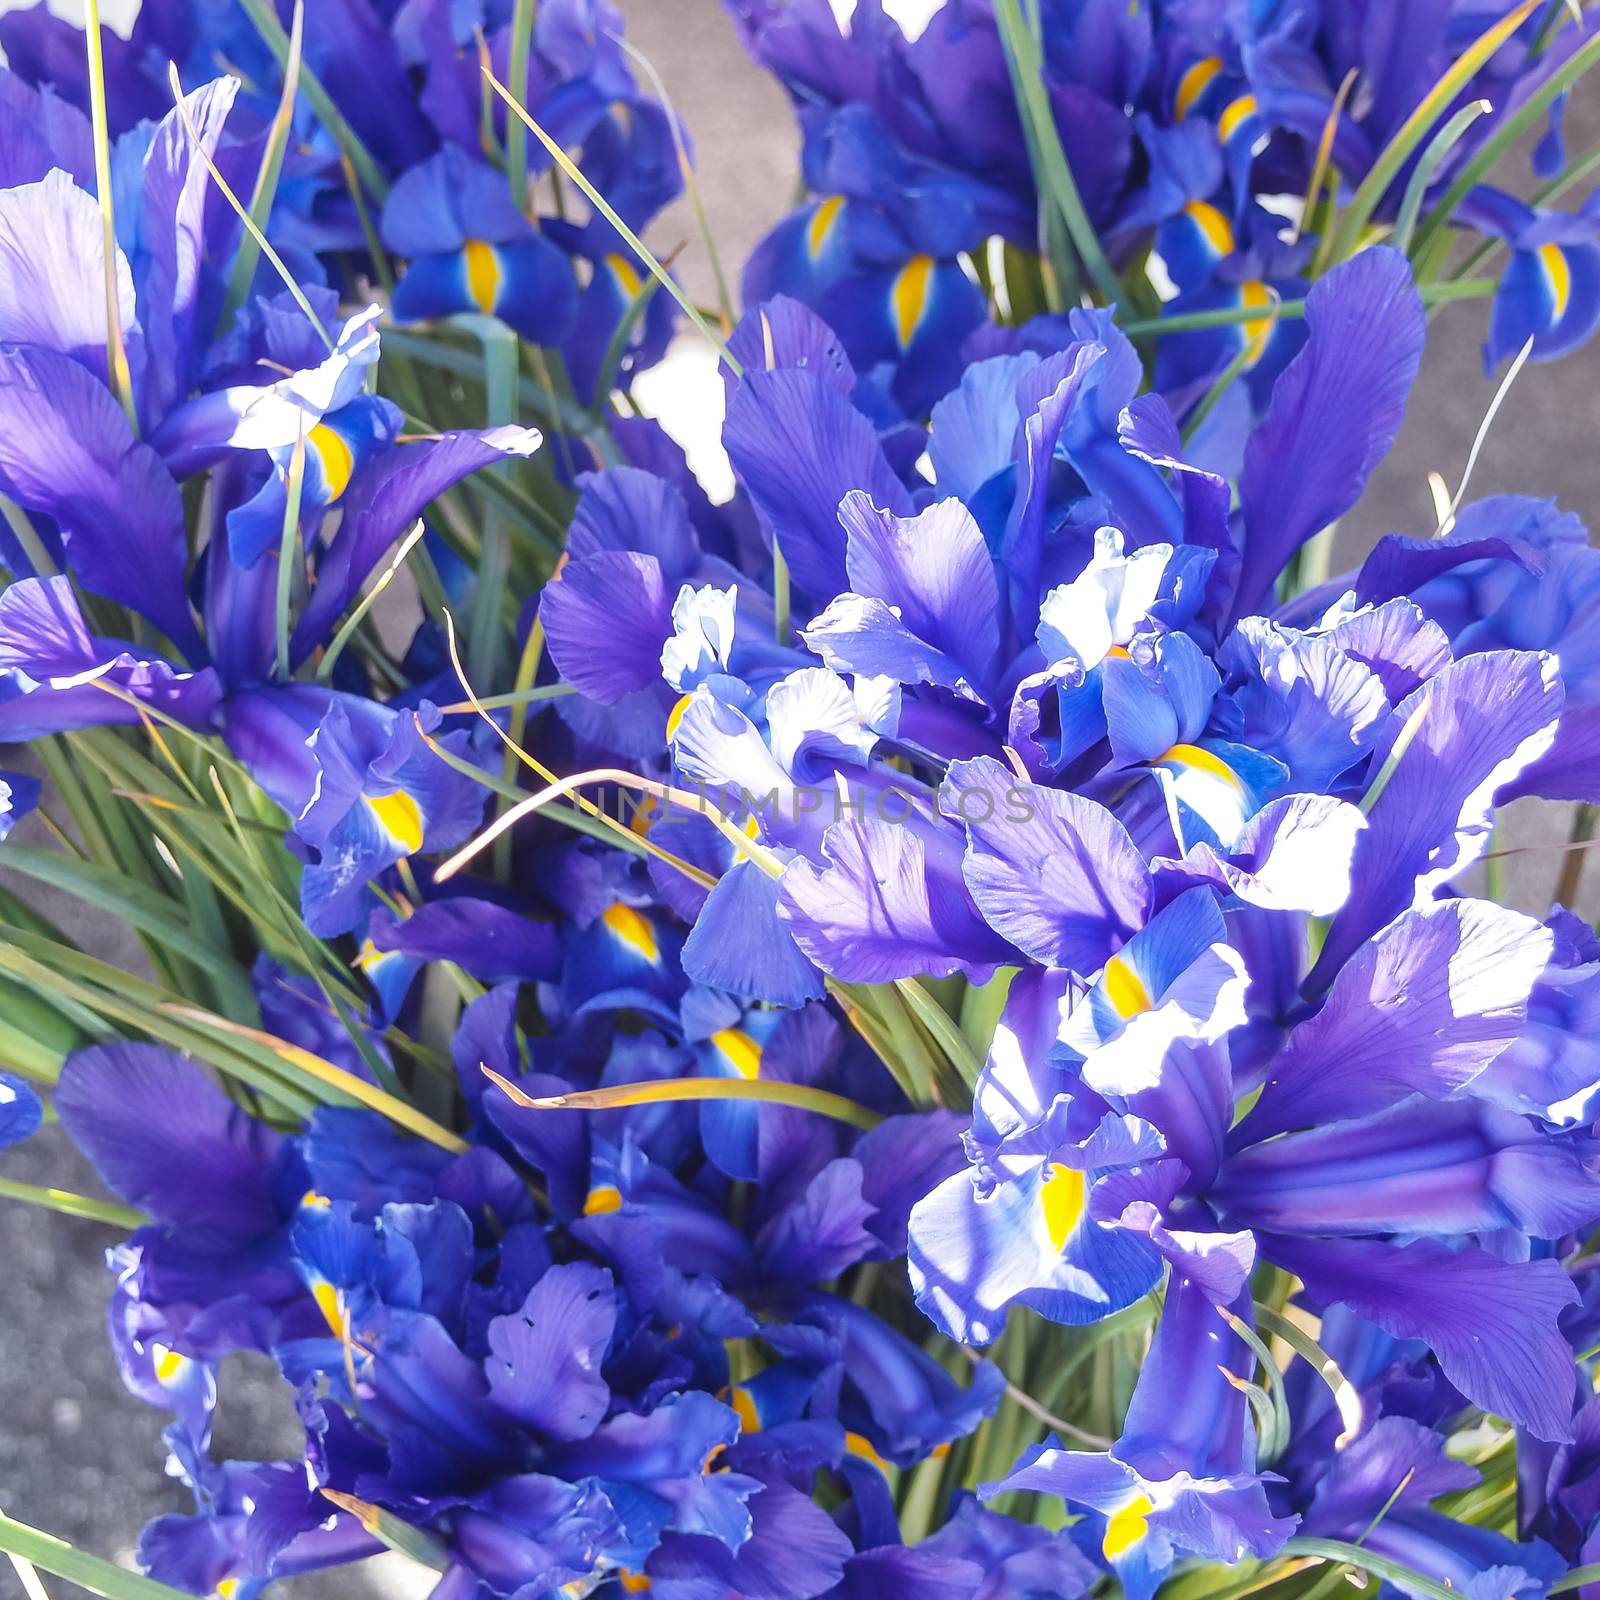 Purple iris in garden, blue and purple colored iris flowers